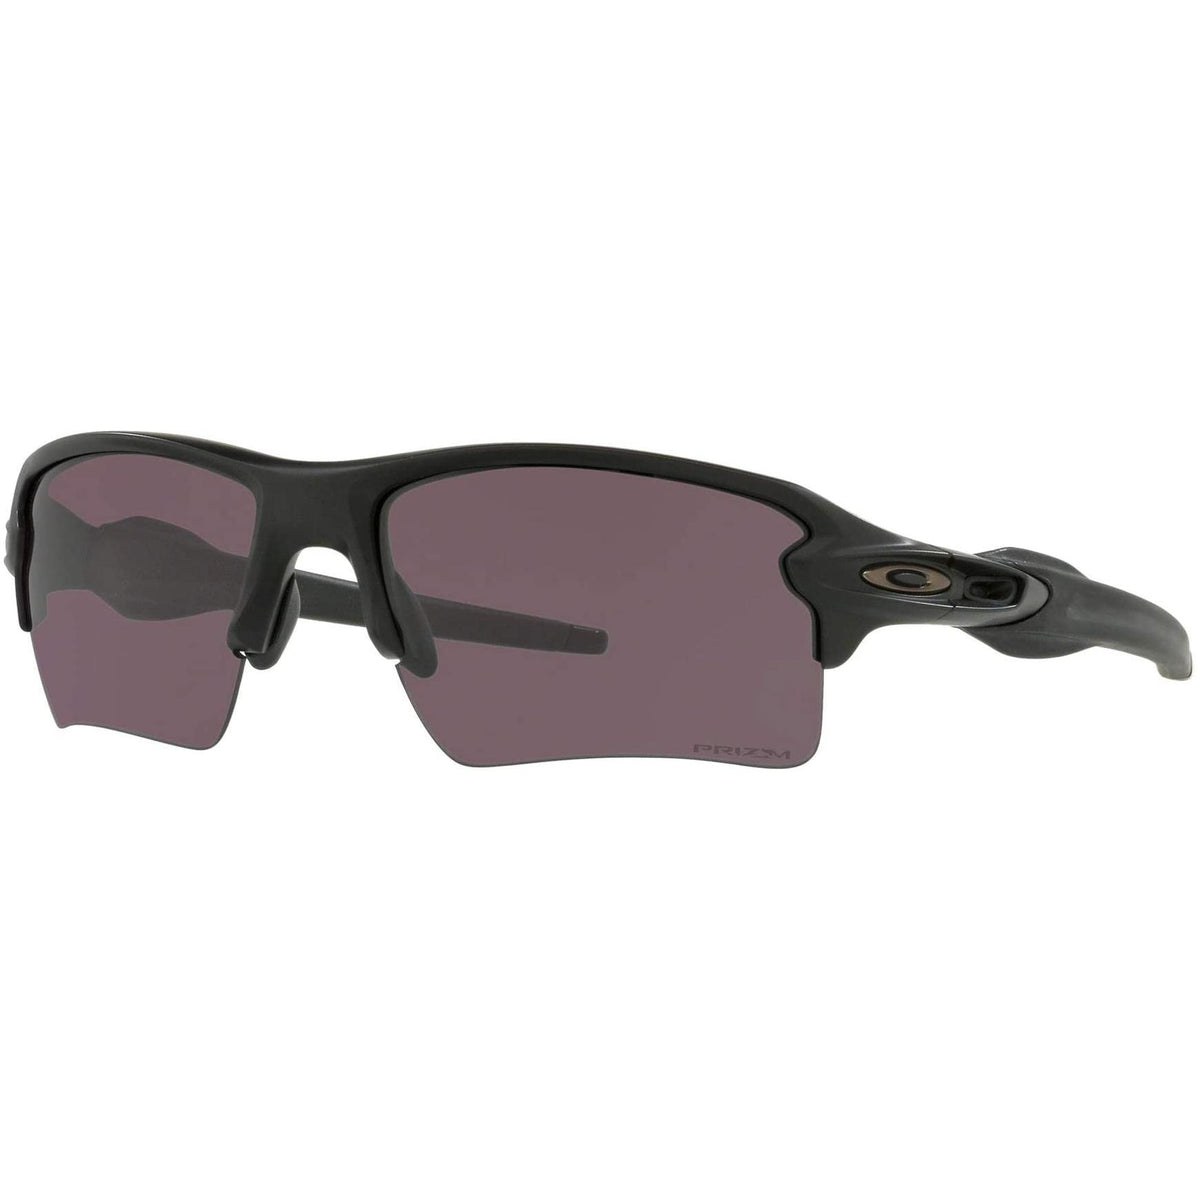 Oakley Standard Issue Flak 2.0 XL Sunglasses